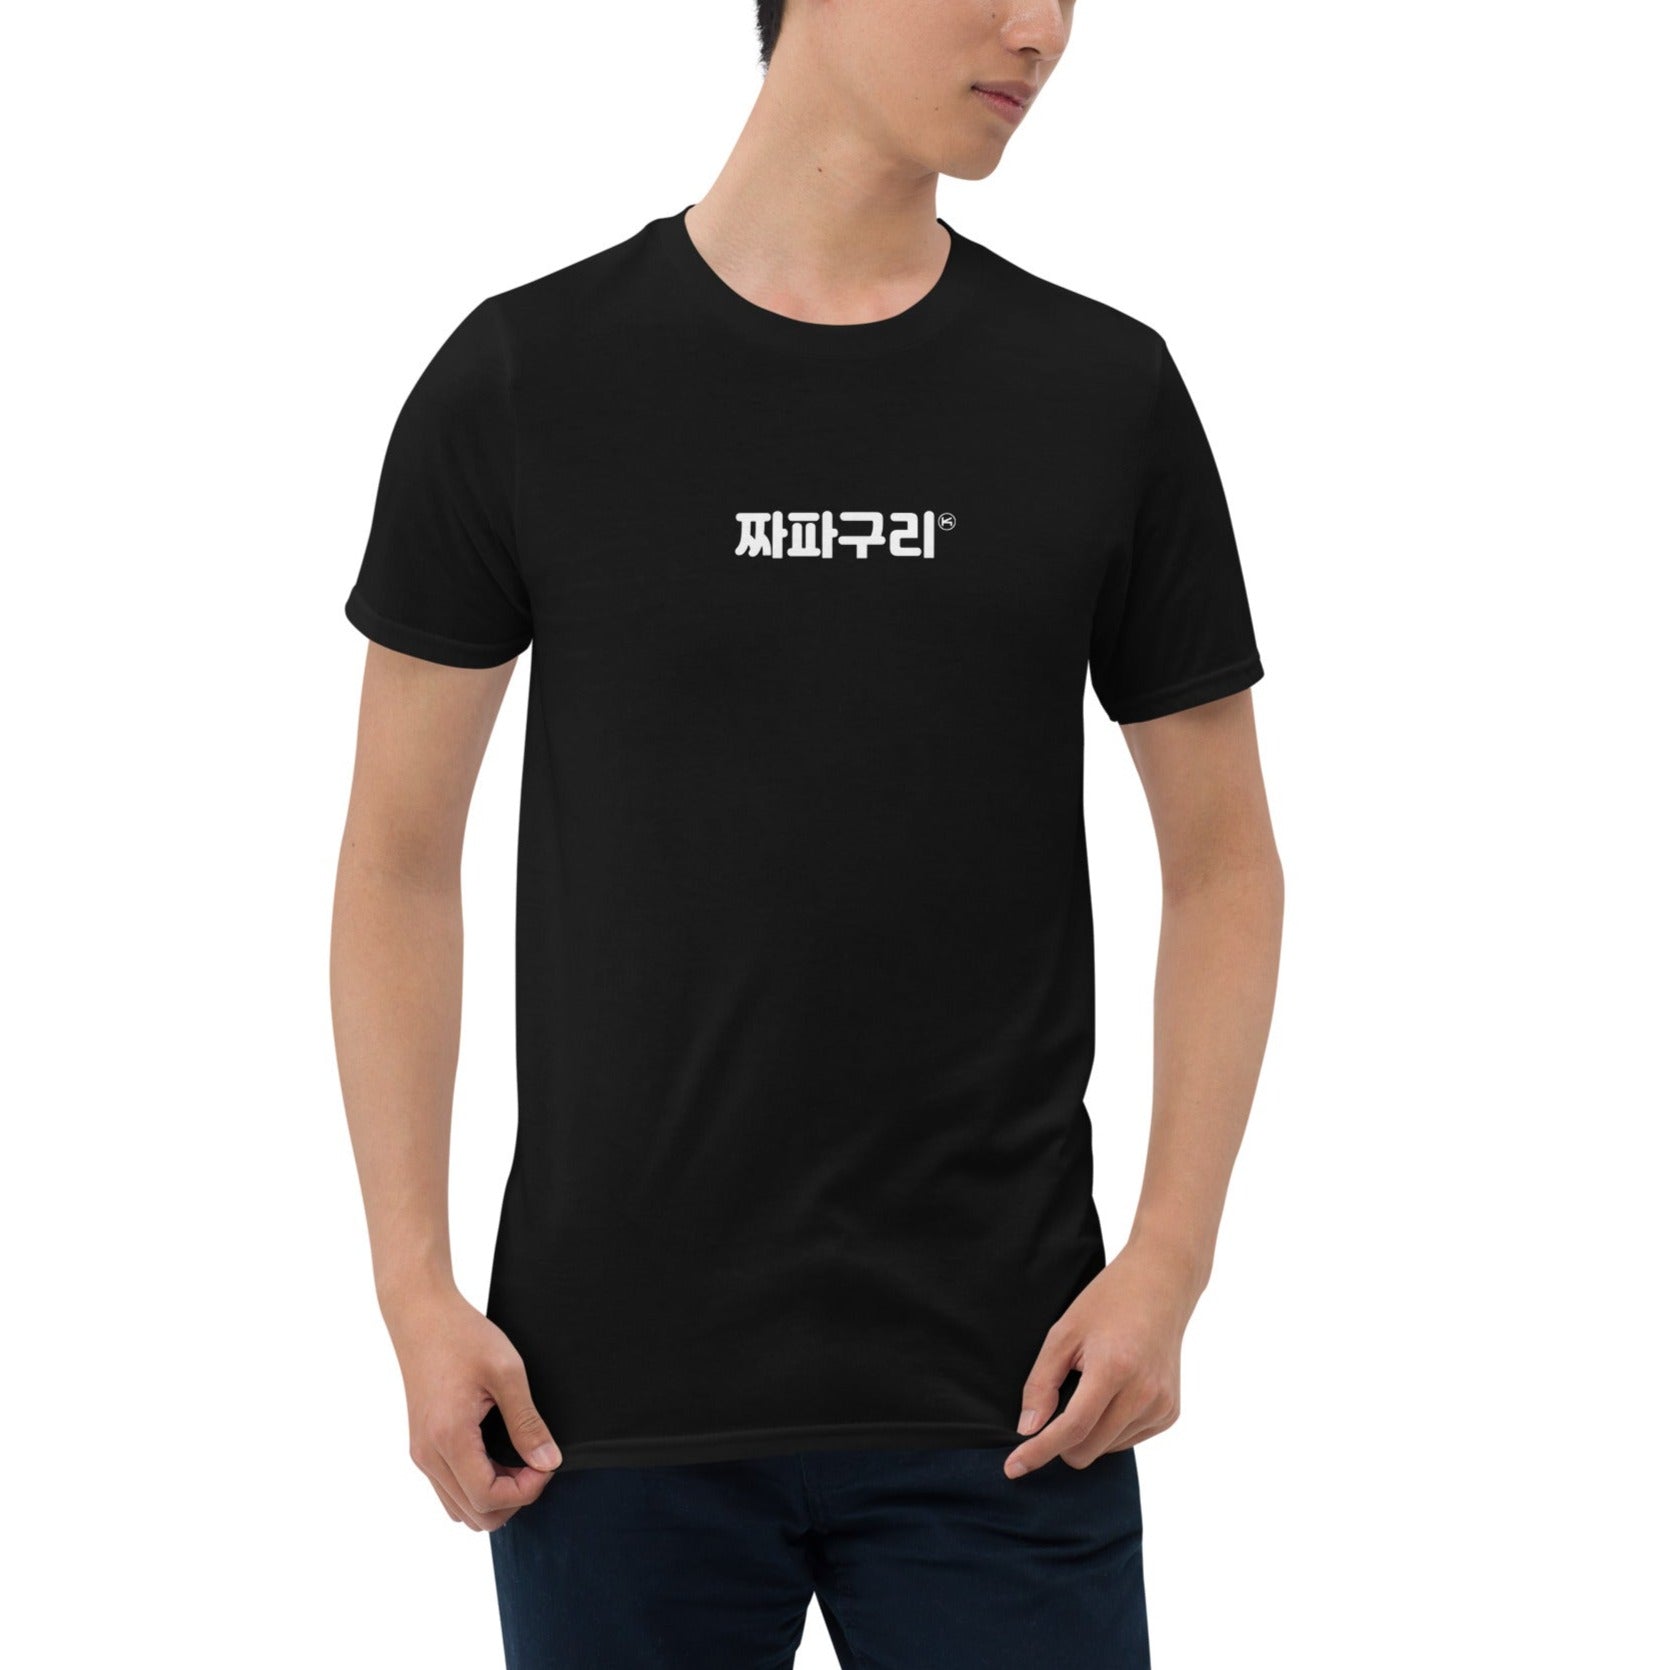 Jjapaguri in Korean Hangul Kpop Merch Unisex T-Shirt - kpophow